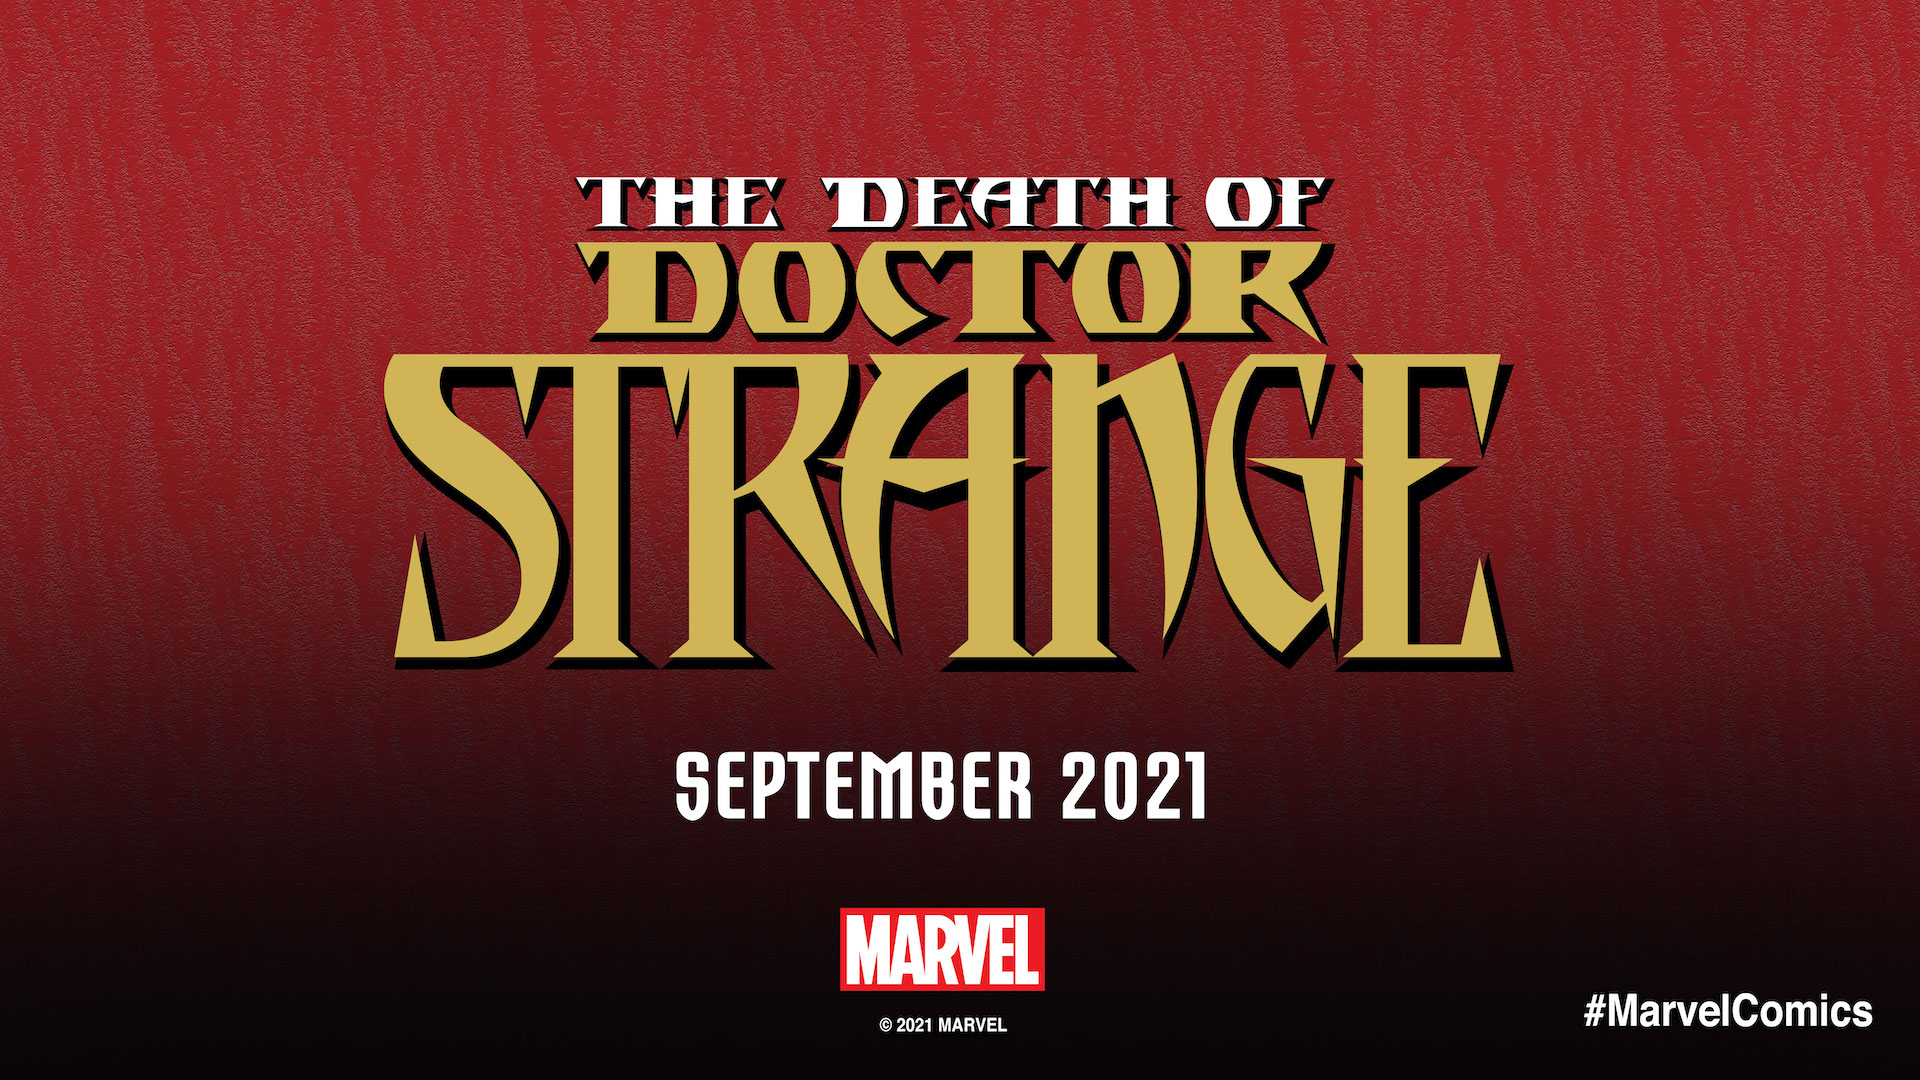 Marvel Comics teases 'The Death of Doctor Strange' for September 2021